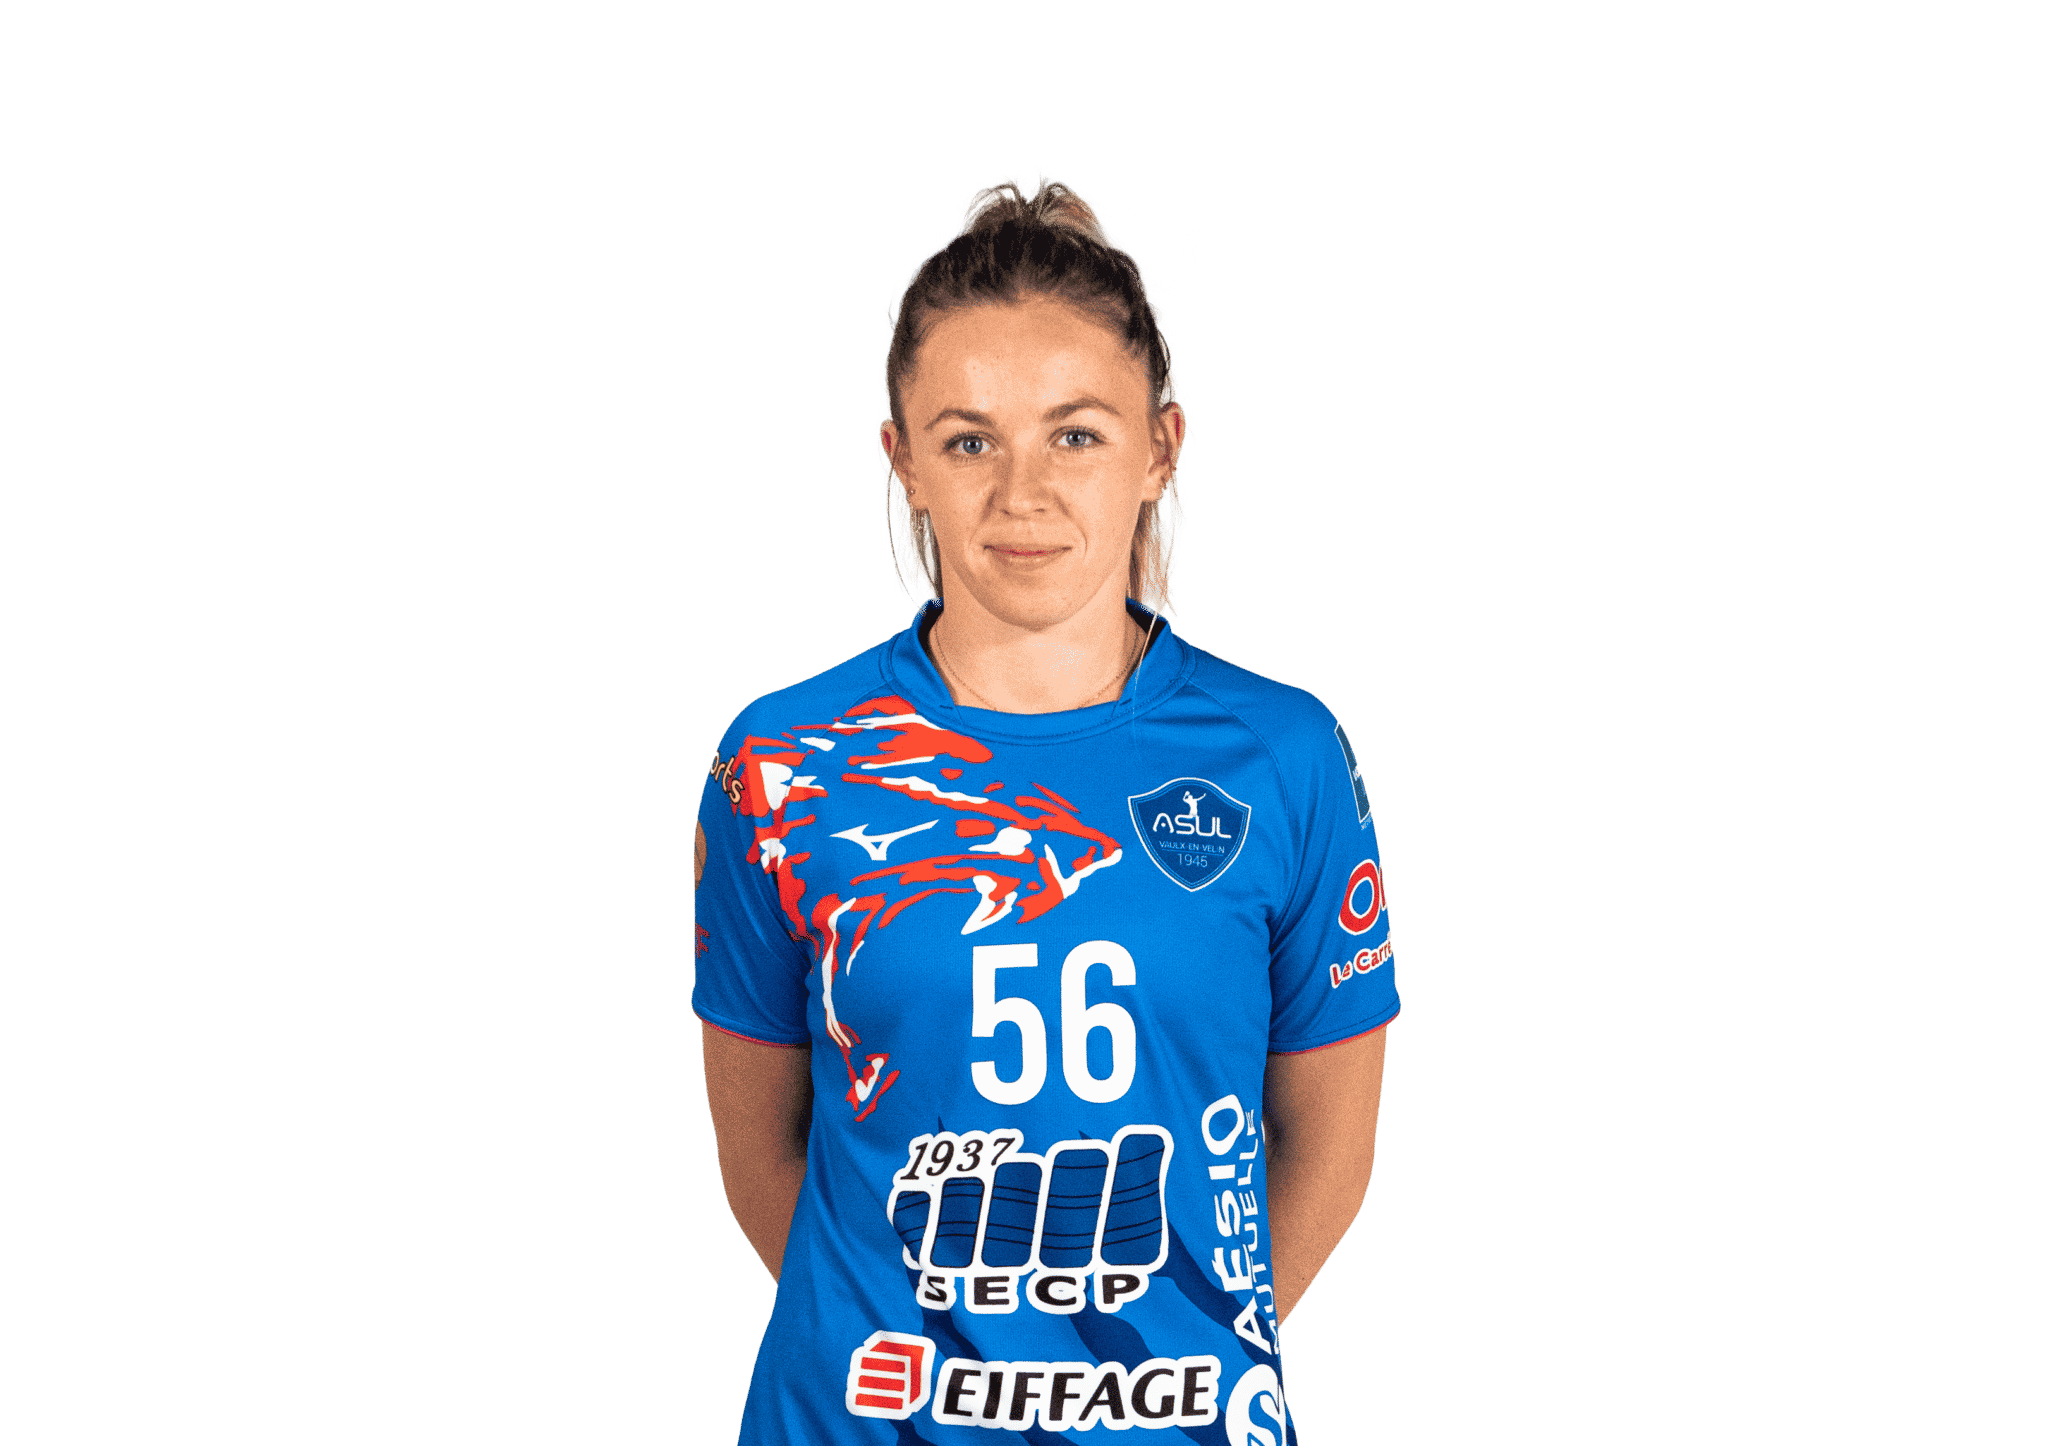 margot-lefevre - Gardienne division 2 féminine de handball de ASUL Vaulx-en-Velin